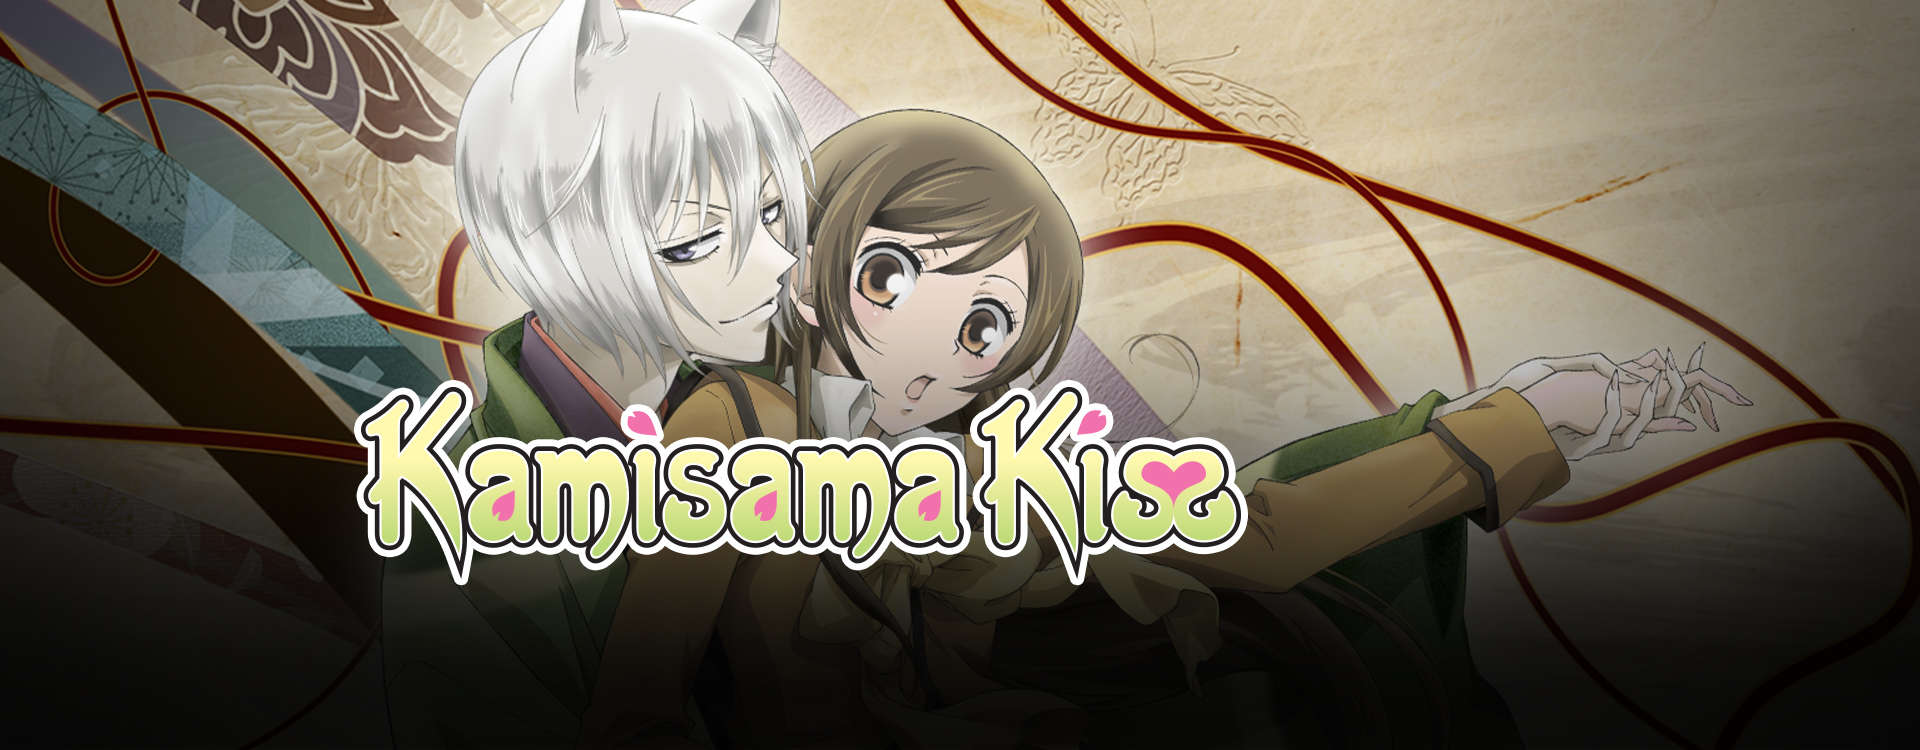 Stream Watch Kamisama Kiss Episodes Online Sub Dub